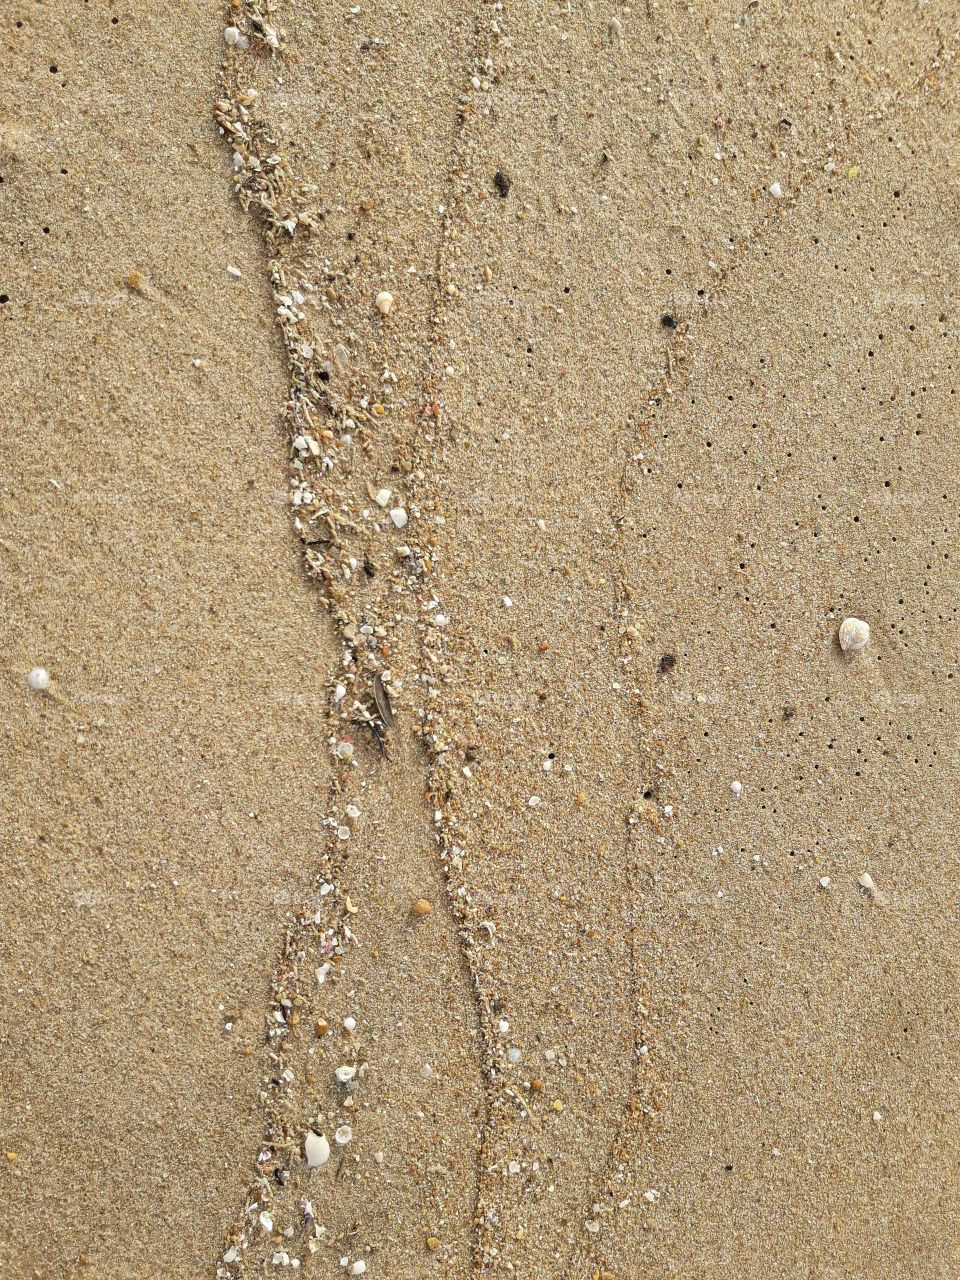 Waves pattern on the seashore